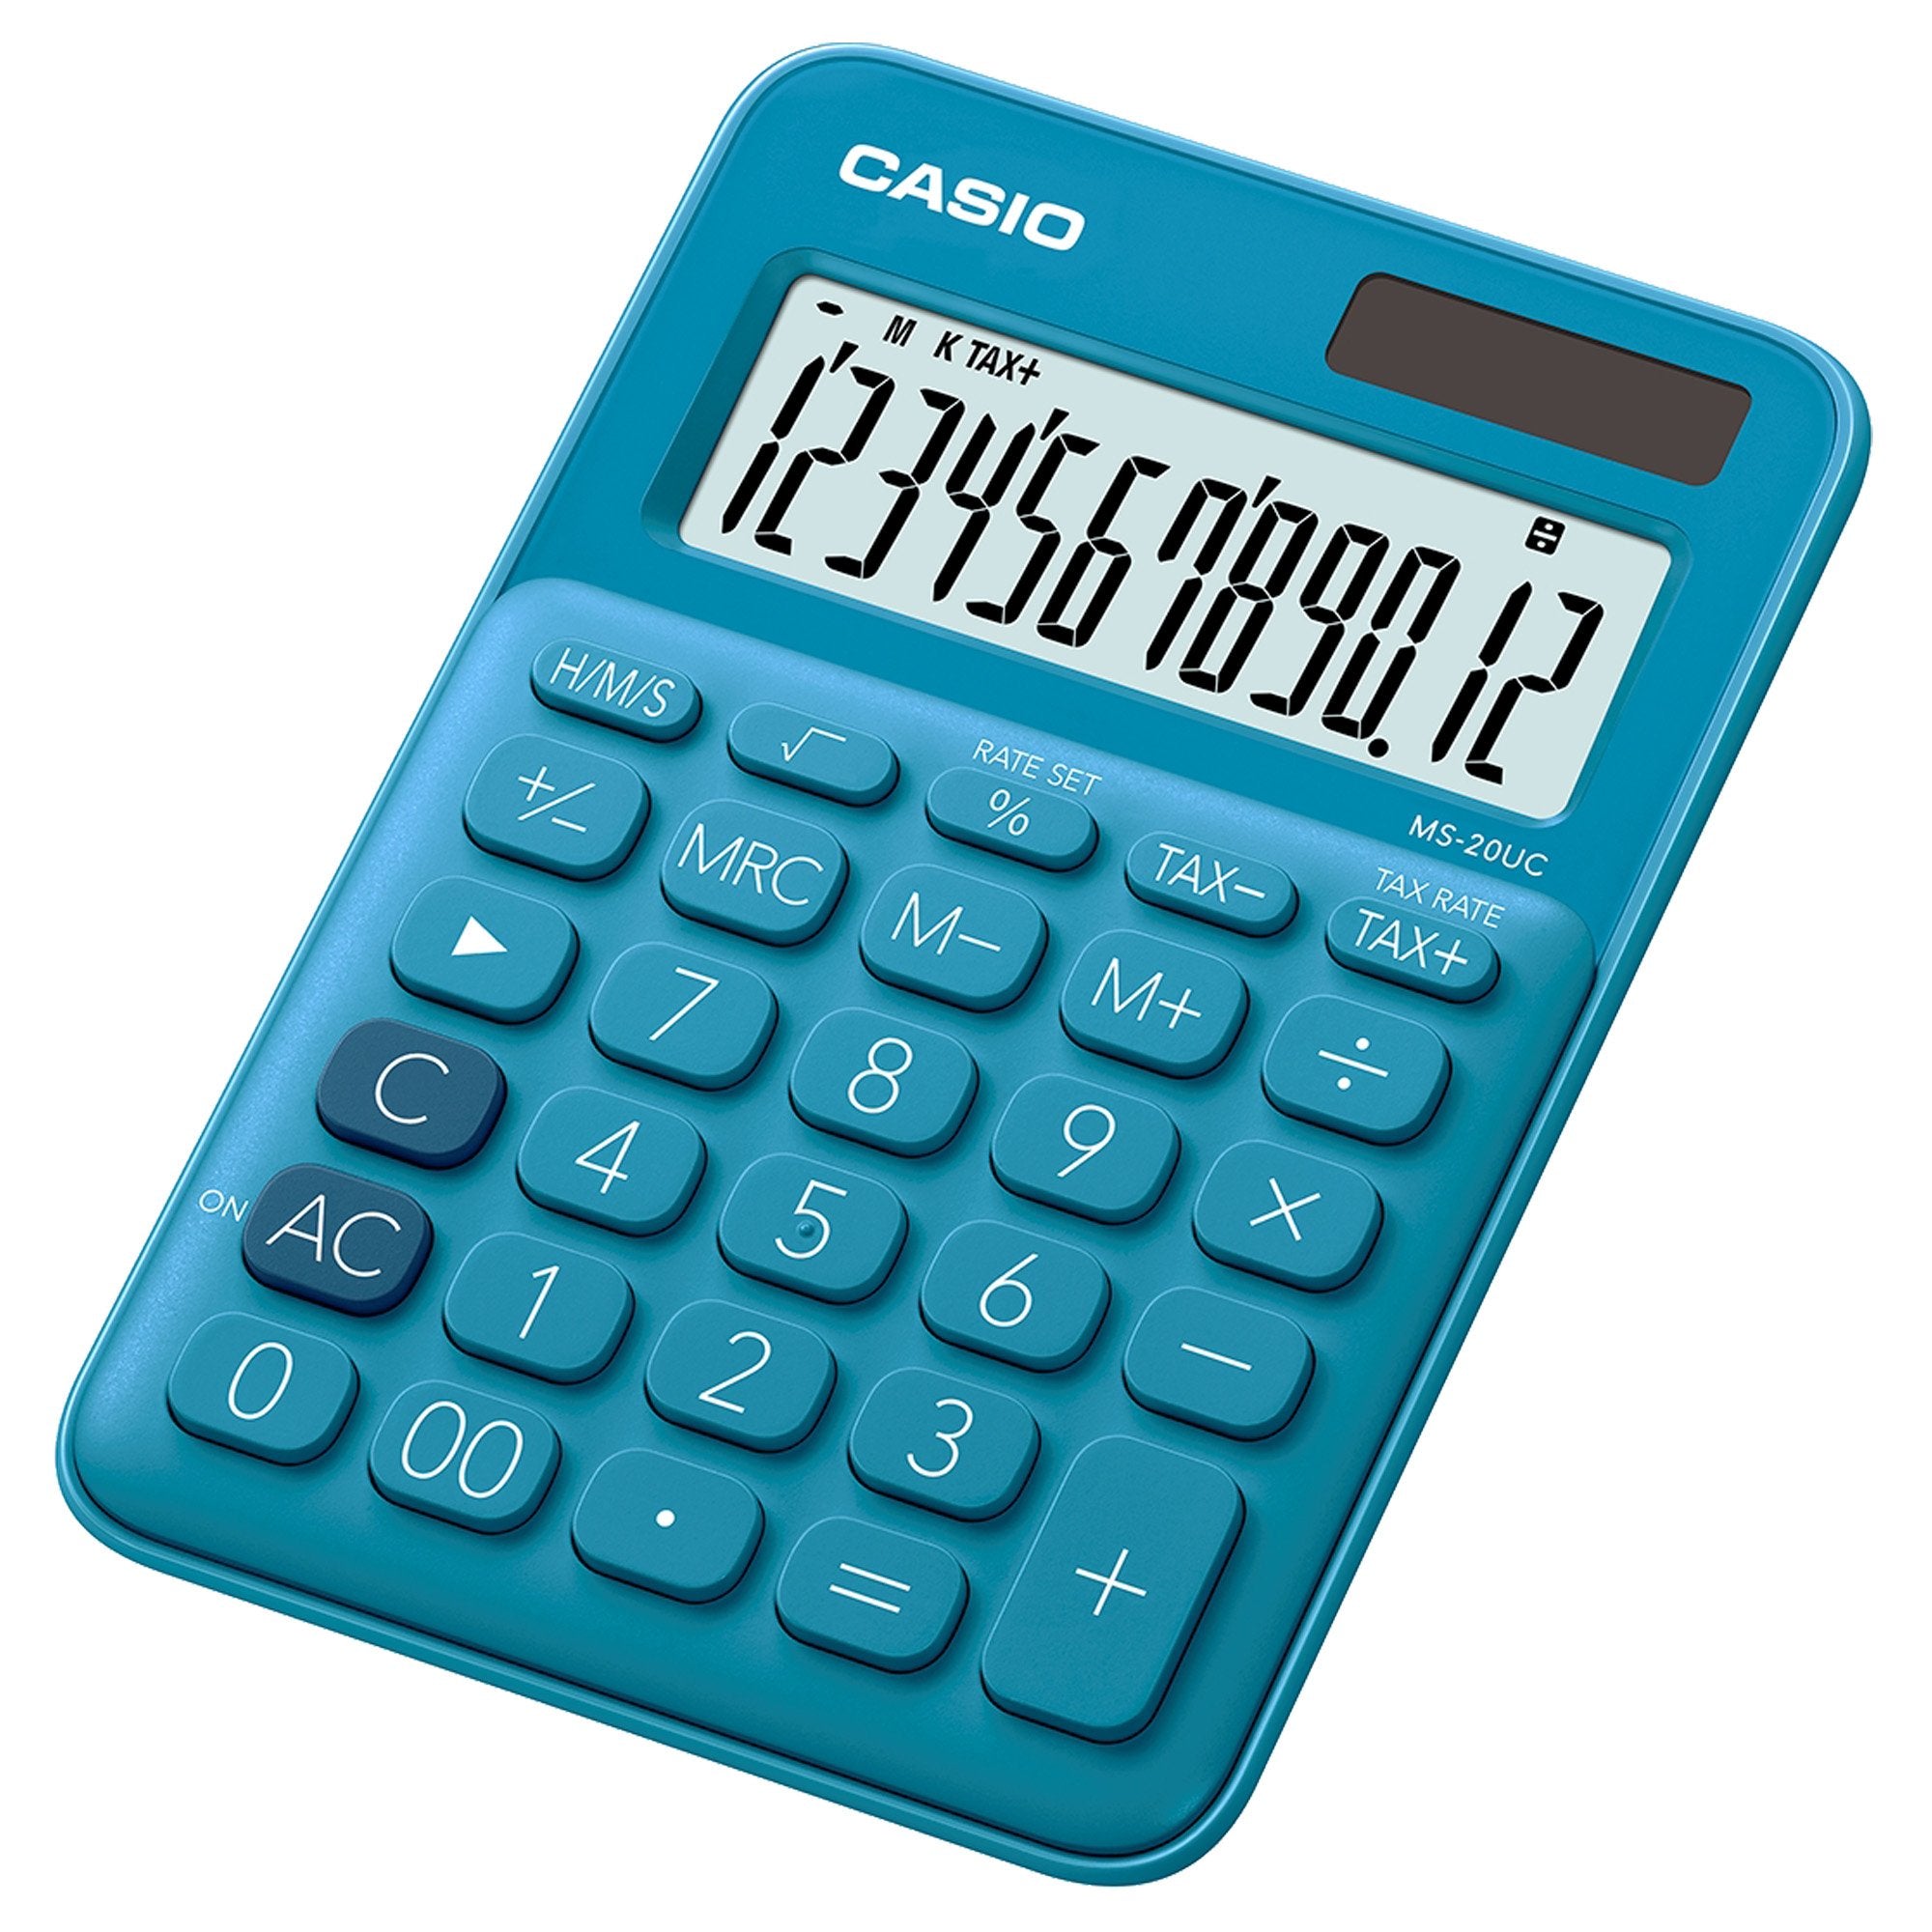 casio-calcolatrice-tavolo-ms-20uc-blu